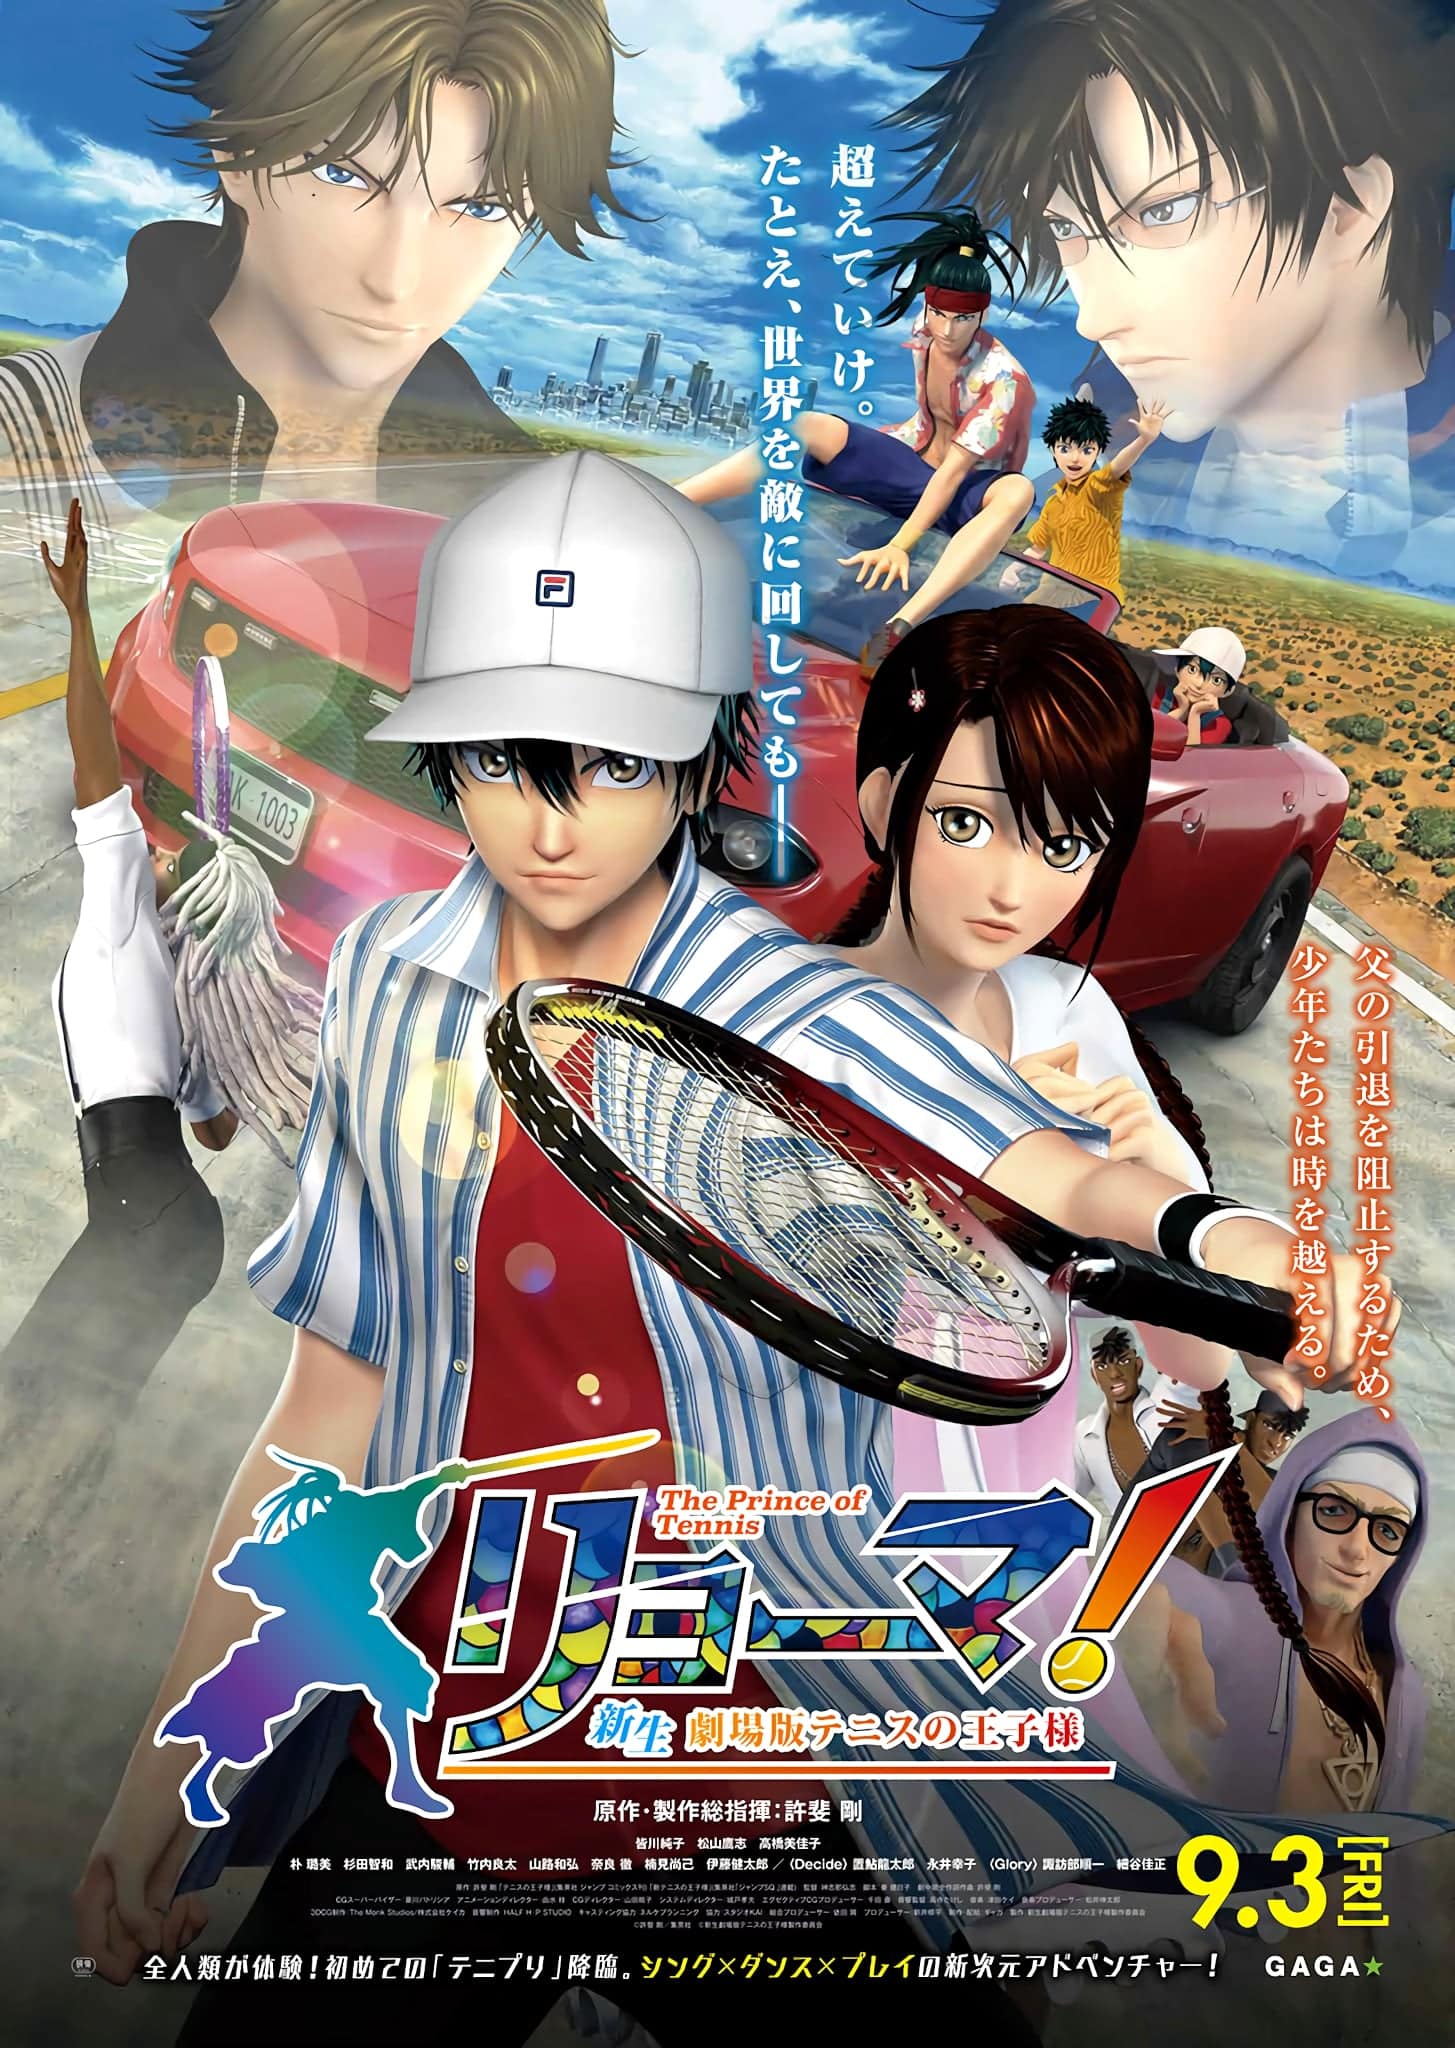 Annonce du film Ryoma Shinsei Gekijouban Tennis no Ouji-sama parmi les animes de été 2021